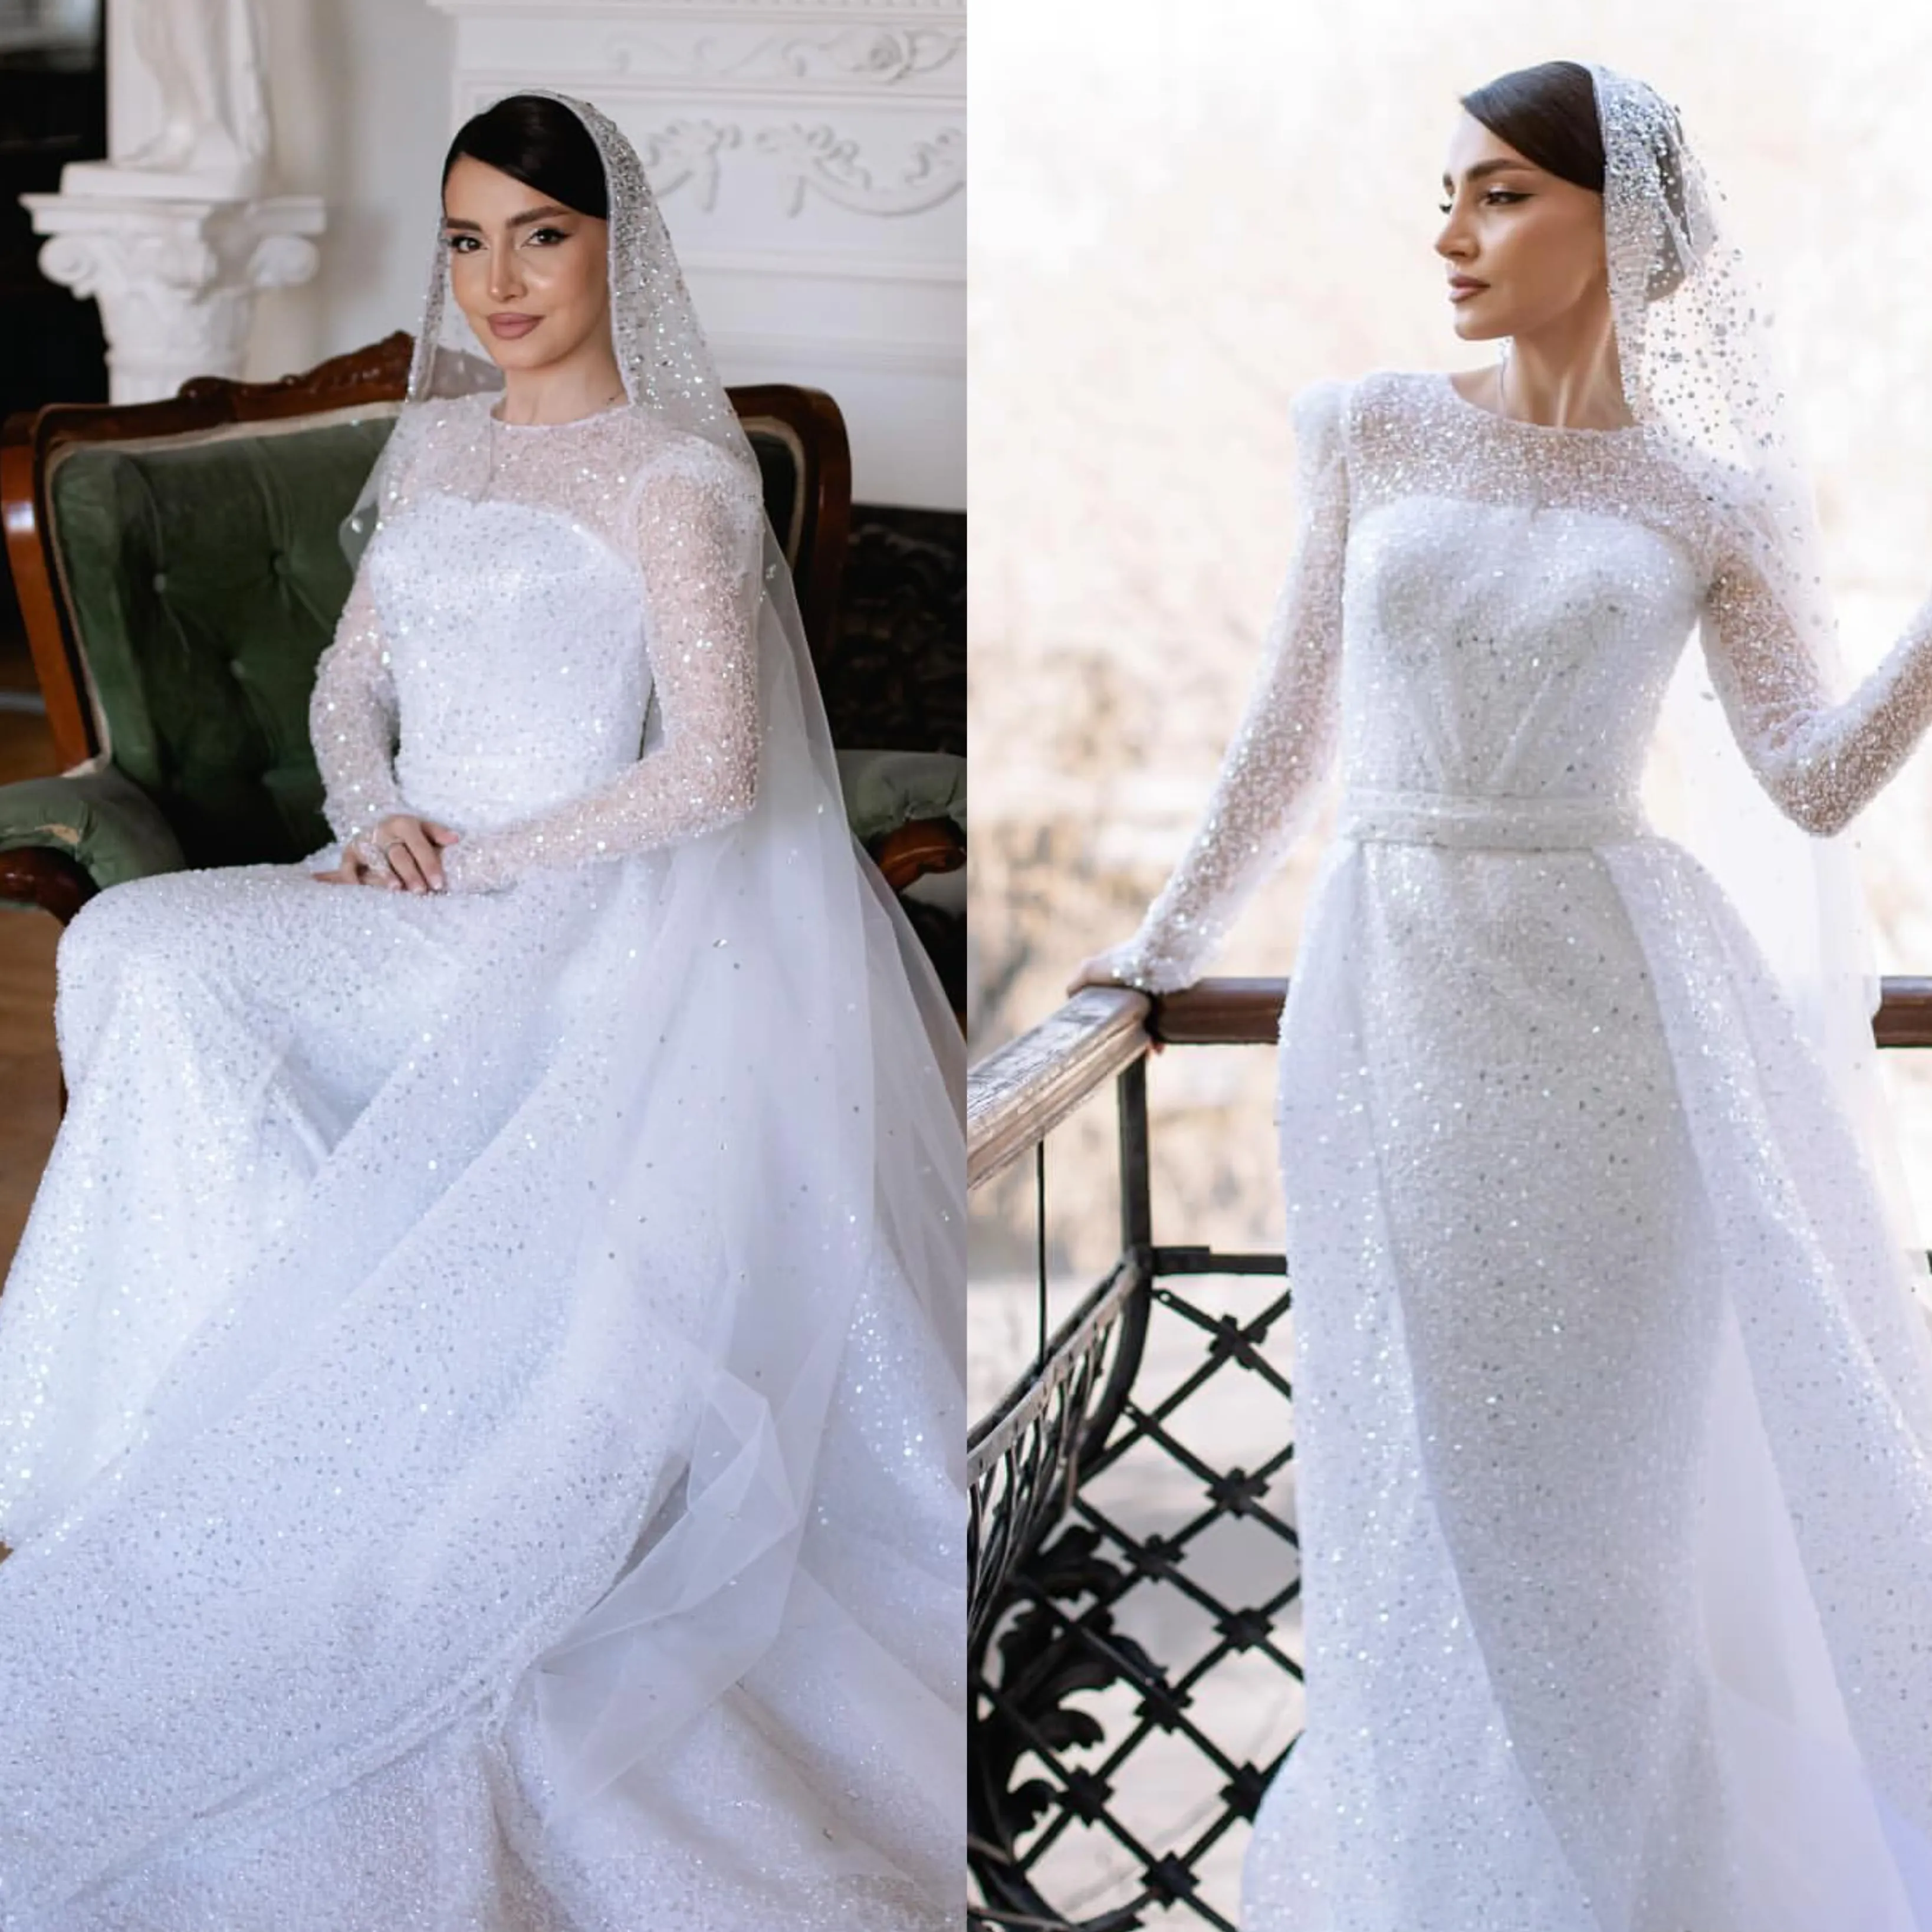 Gorgeous Sheath Sequins Dress for Long Sleeves Wedding Dresses Bridal Gowns with Detachable Train Saudi Arabic Bride Dress